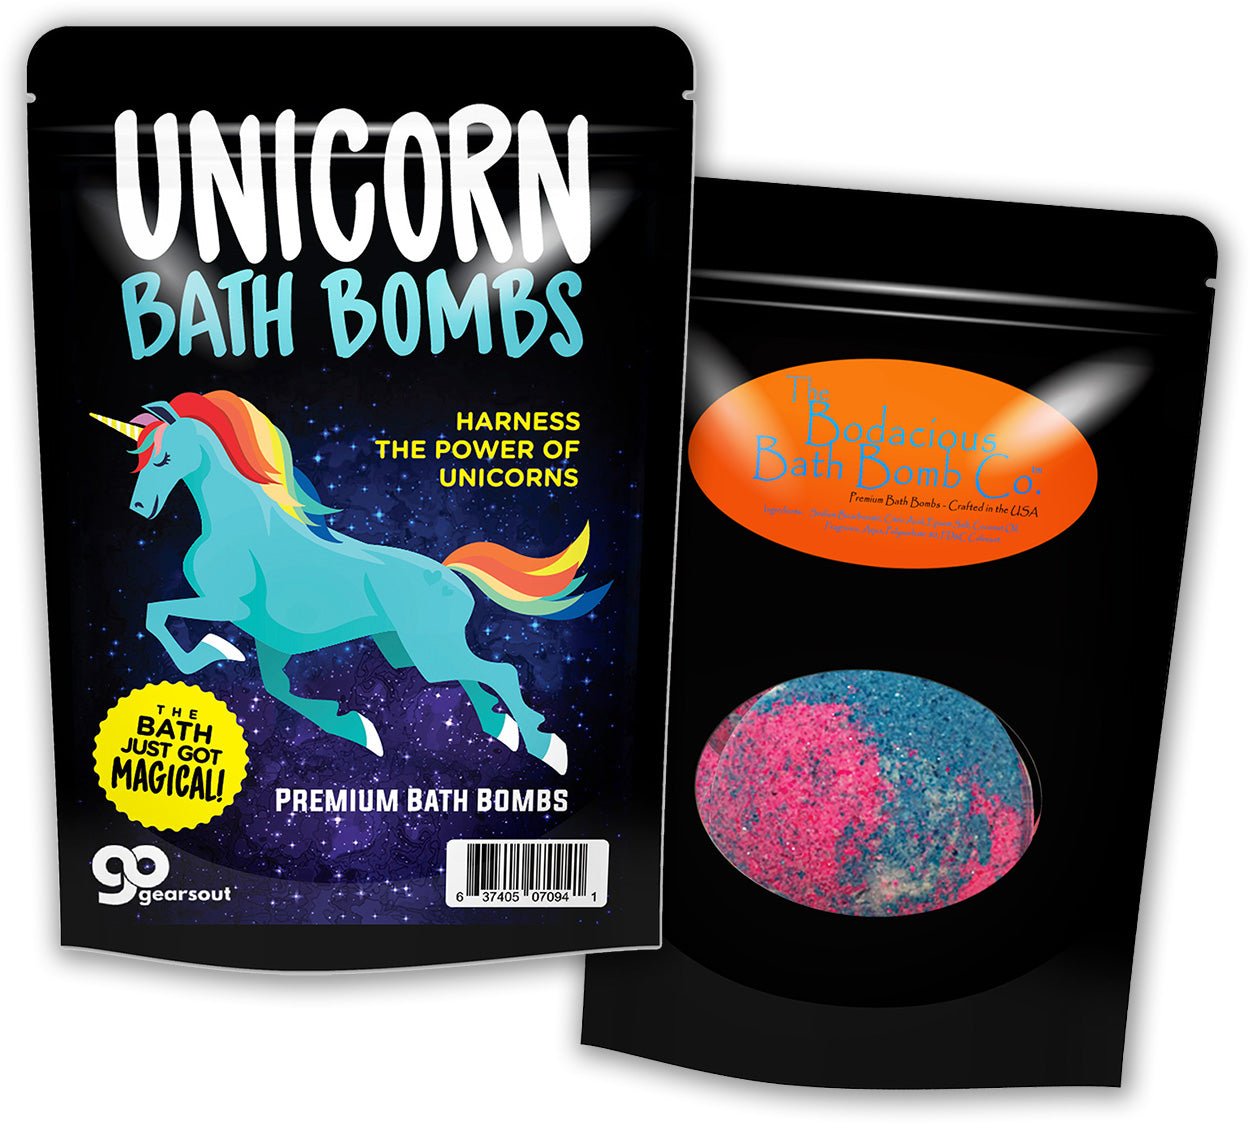 Unicorn Bath Bombs